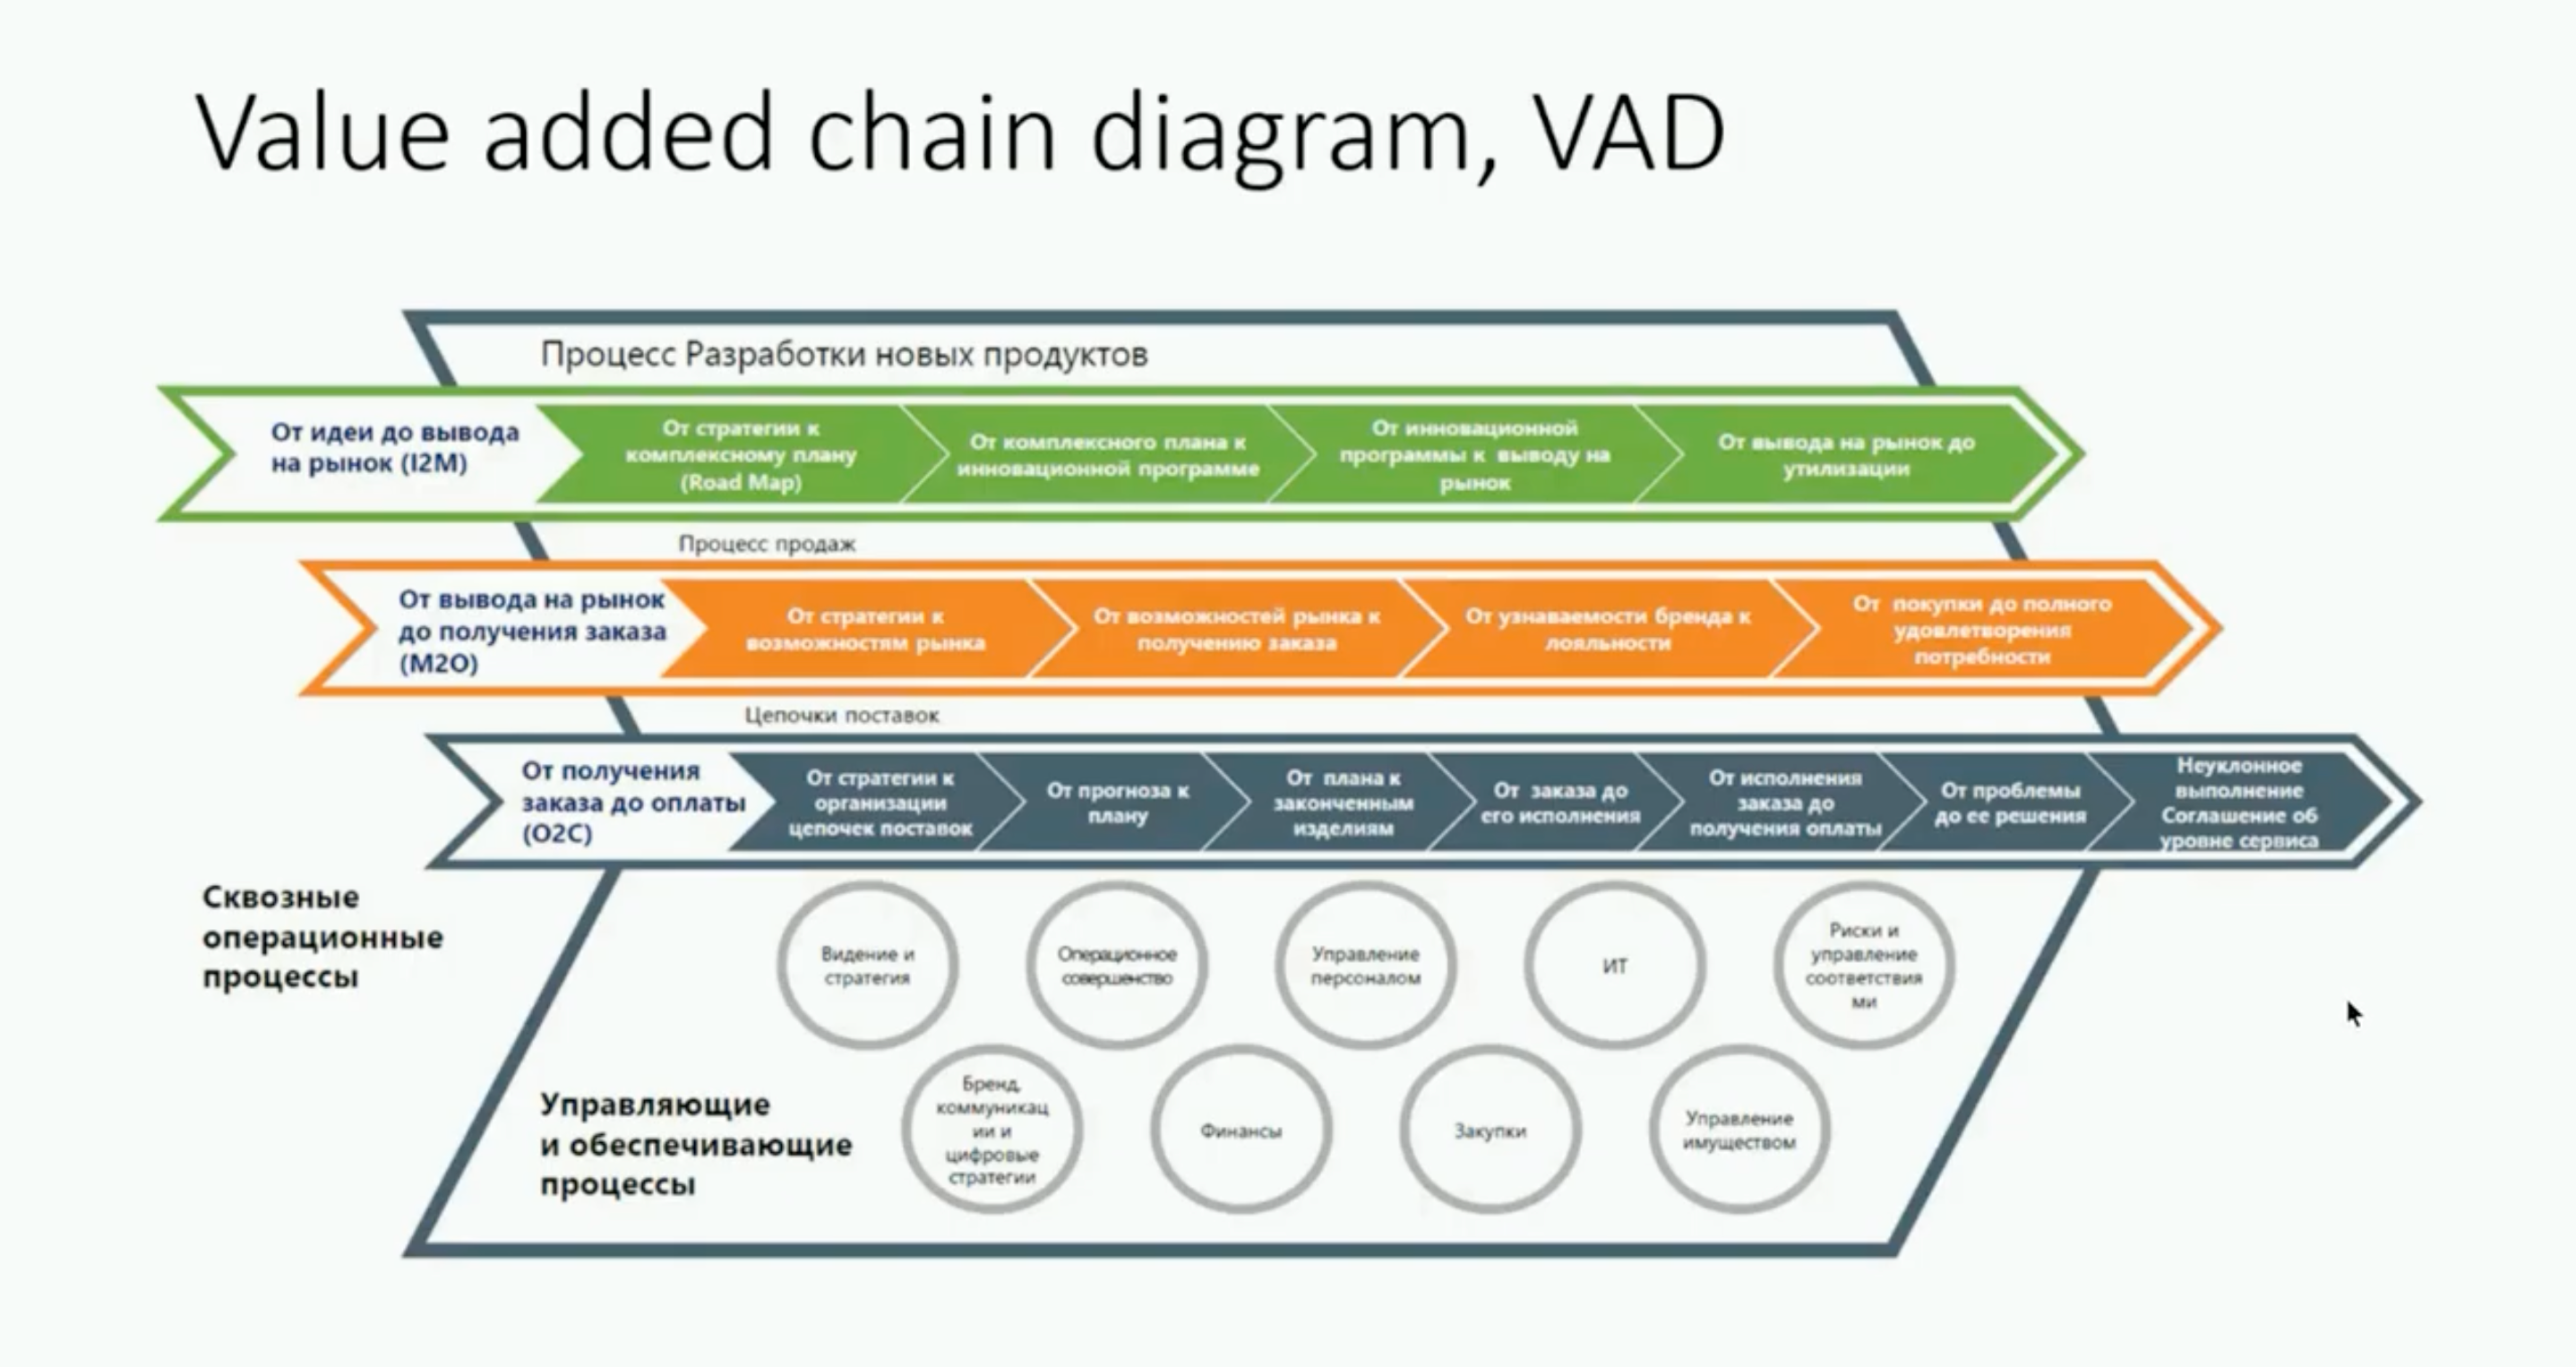 Моделирование бизнес-процессов — vad. Value added Chain diagram. EPC моделирование бизнес-процессов. Vad процессы верхнего уровня.